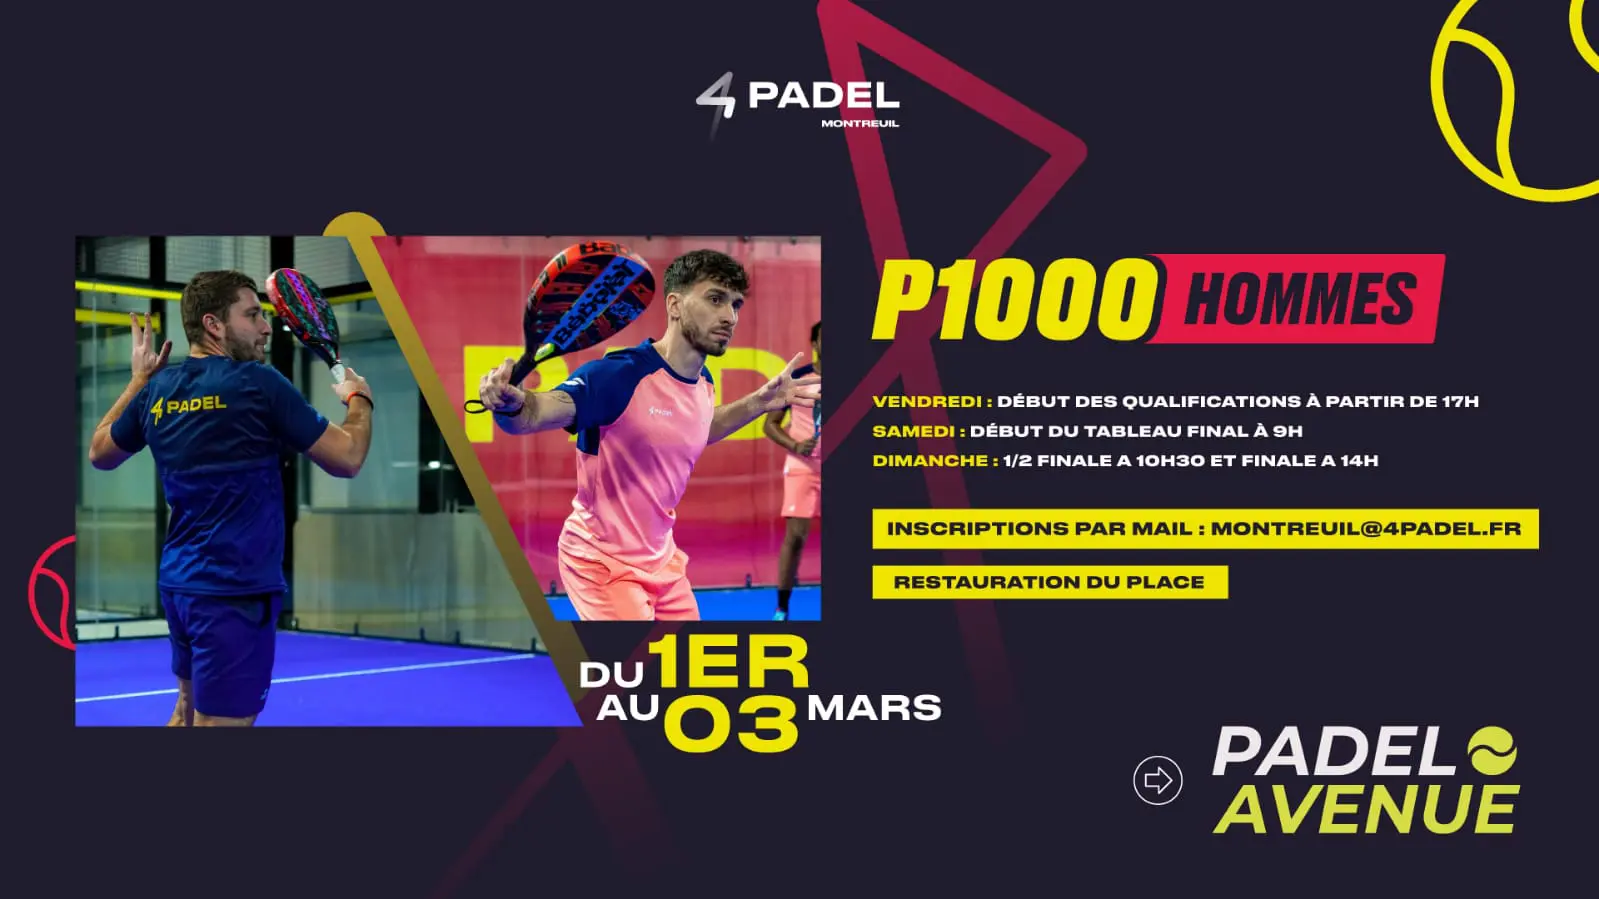 P1000 por Padel Avenue – Conheça a lista de jogadores presentes no 4Padel Montreuil